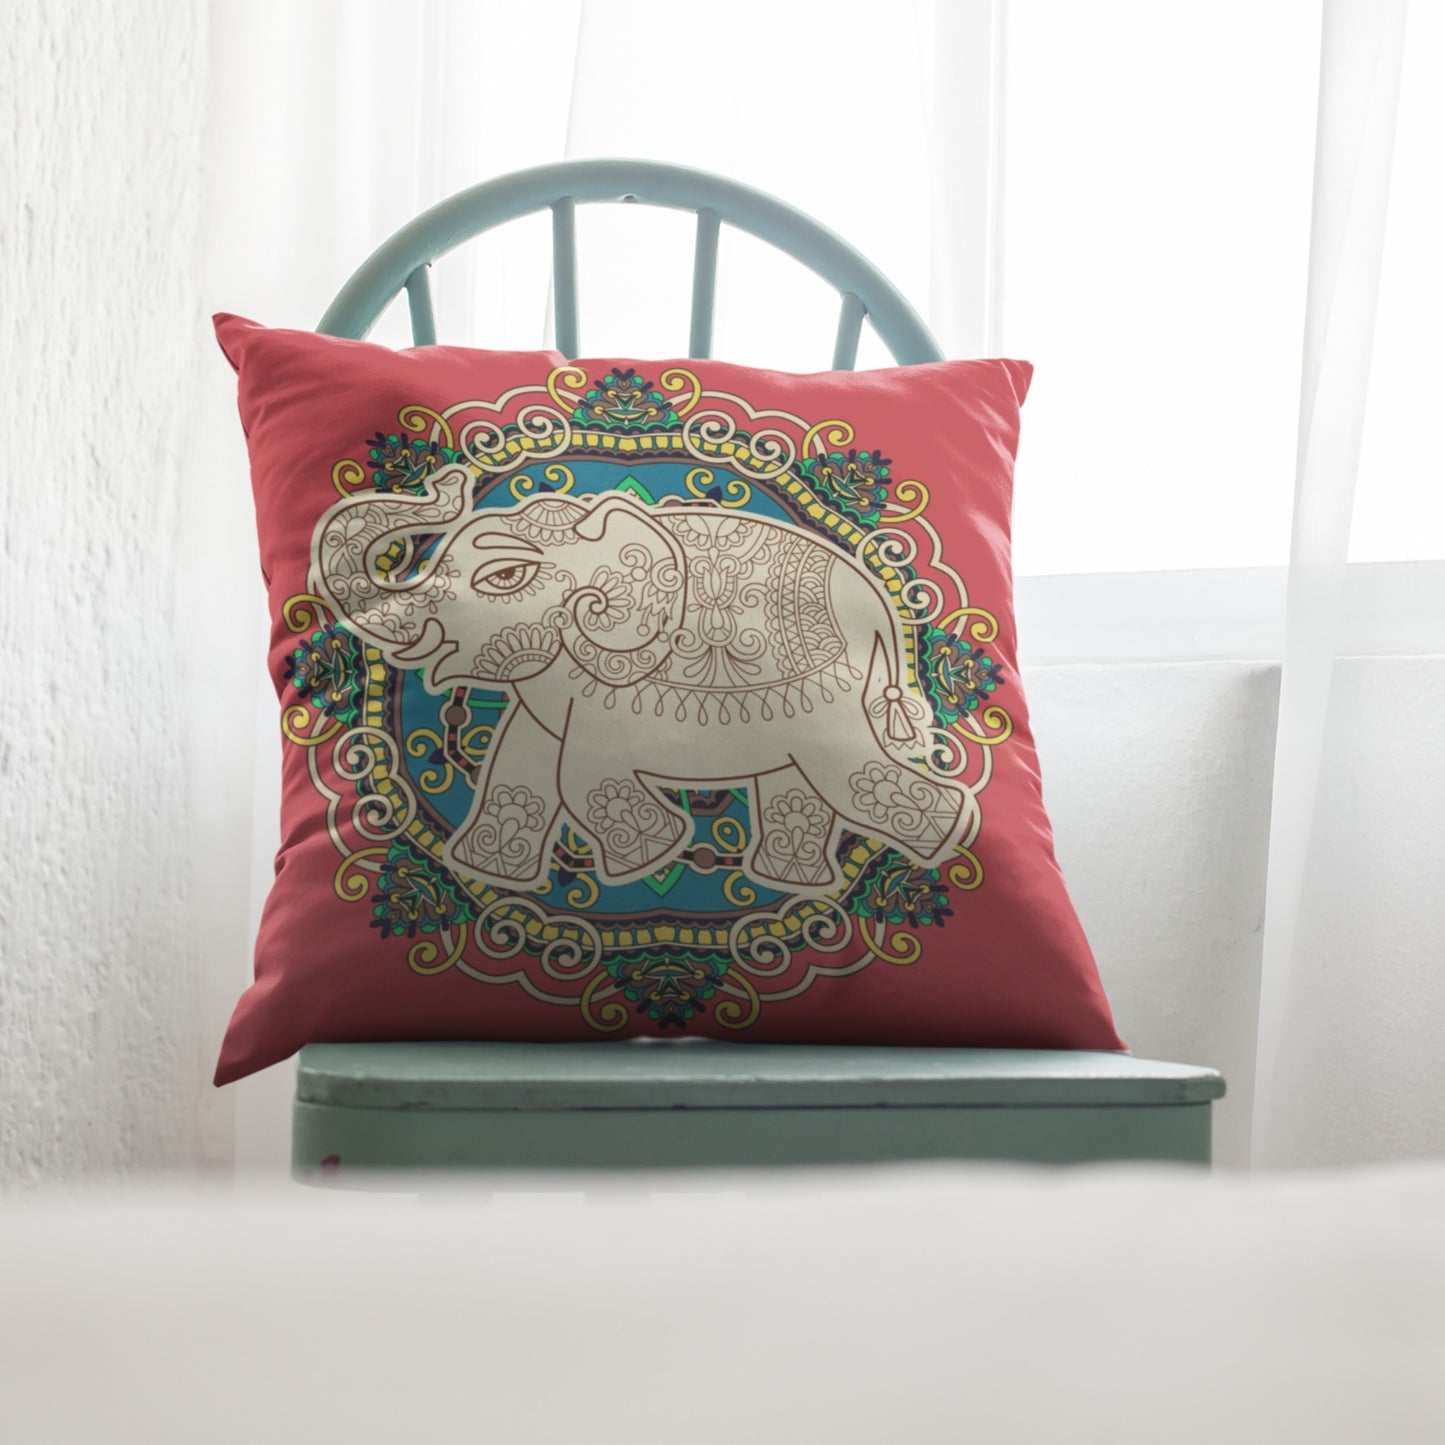 Stylish Printed Throw Pillow with Elephant Symbol Design